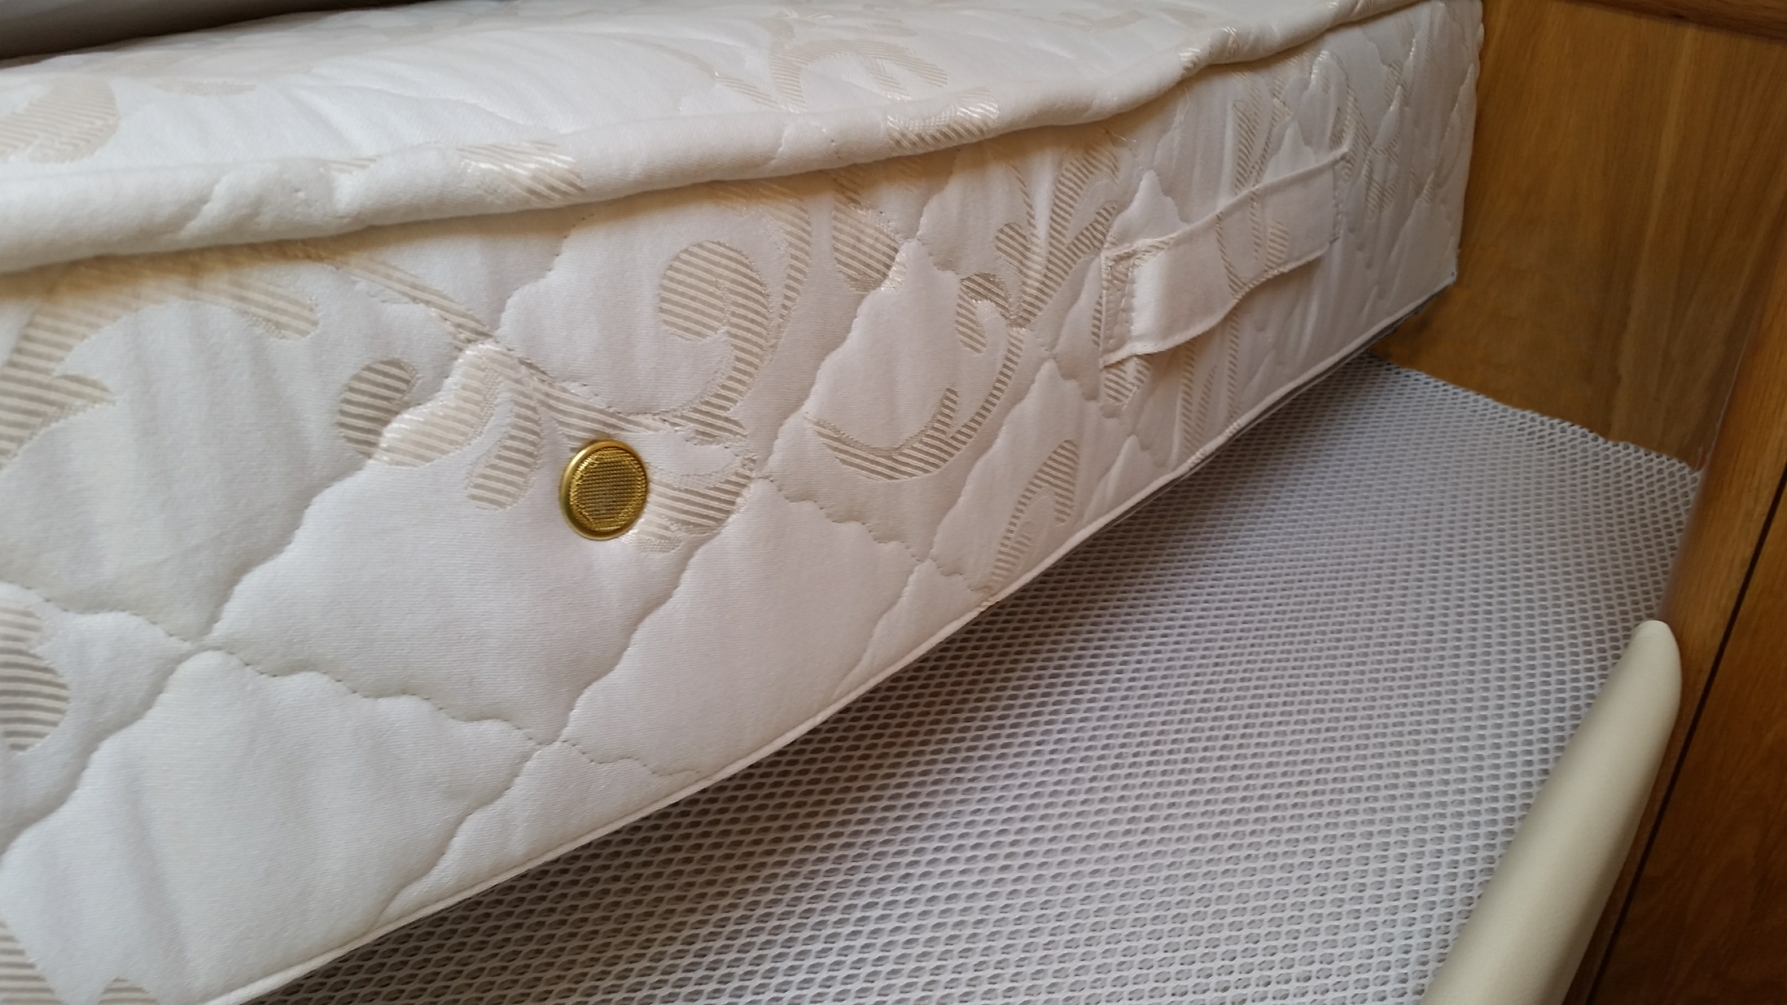 Dry mat anti condensation underlay under a boats mattress